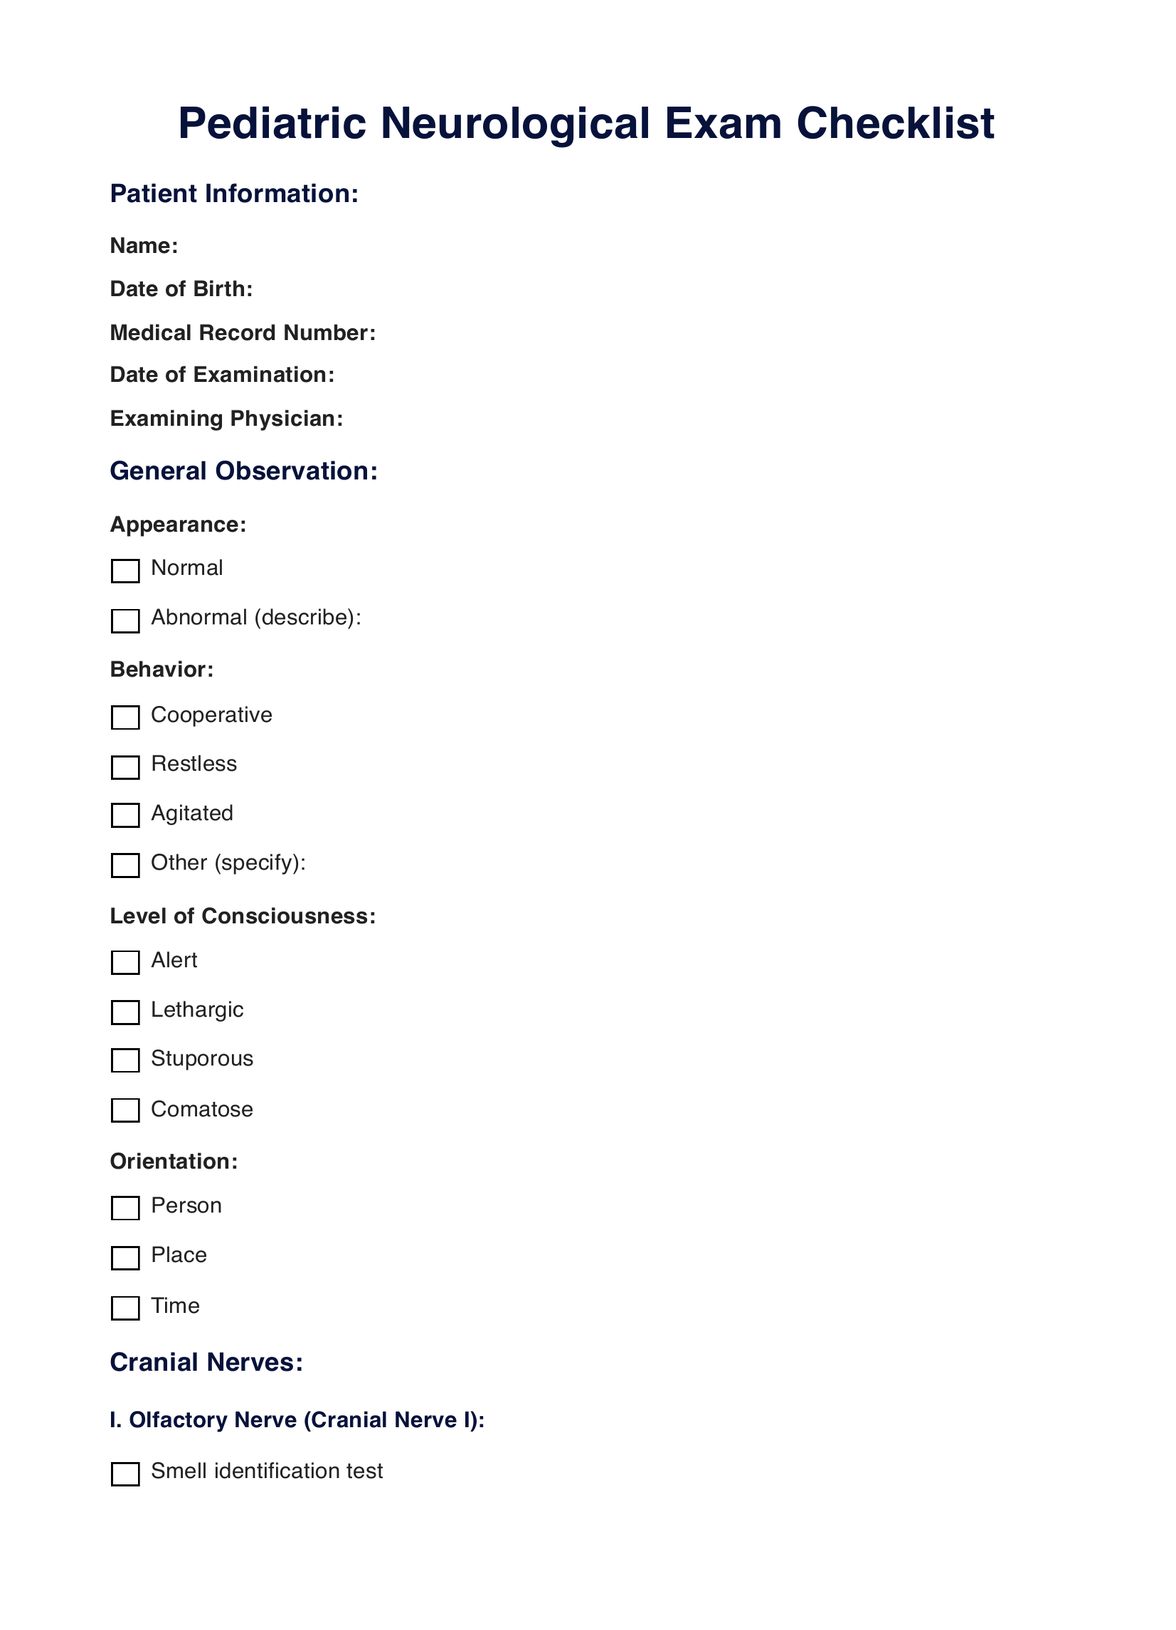 Pediatric Neurological Exam Checklist PDF Example